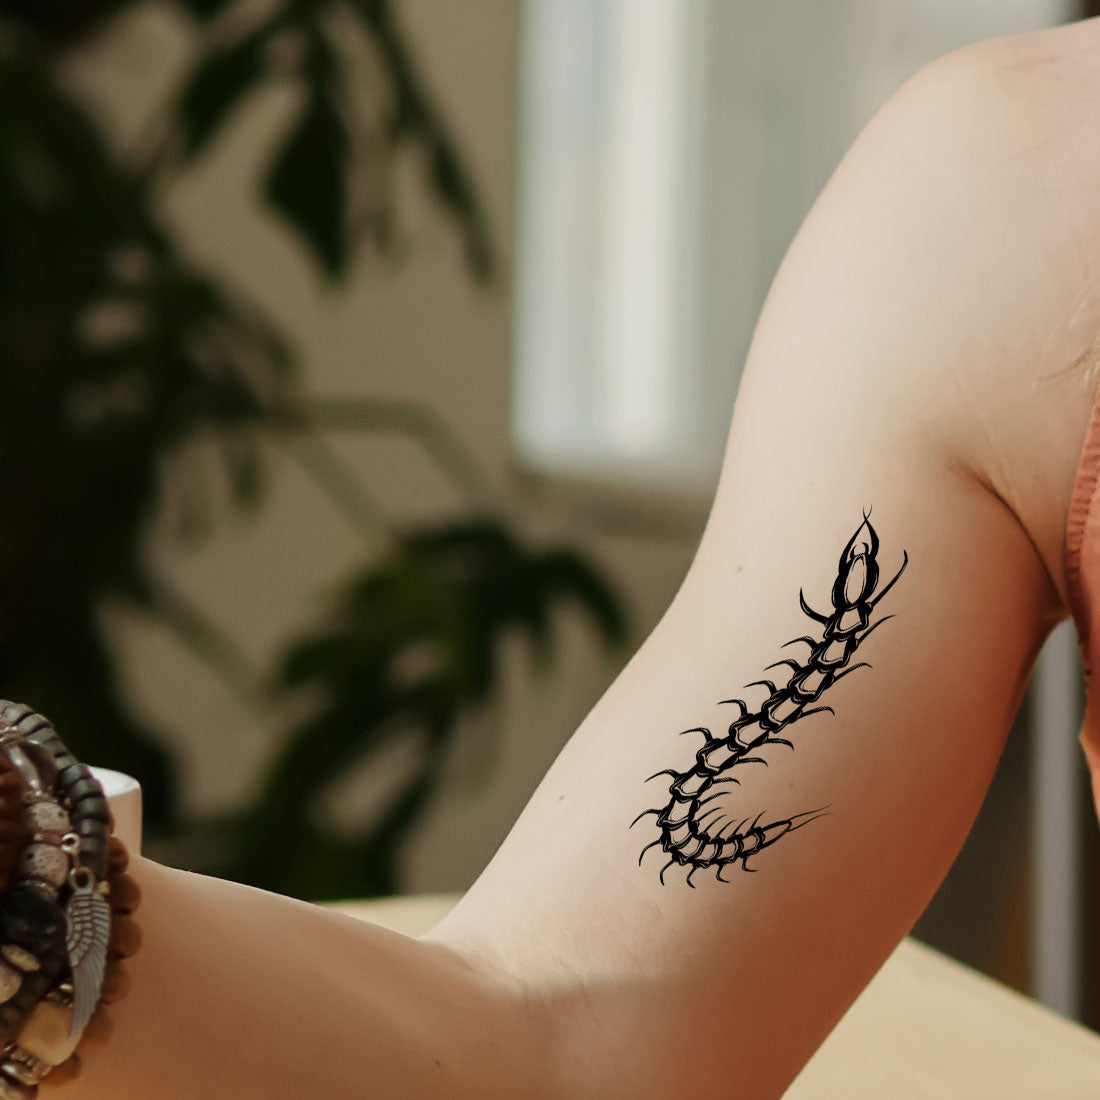 Organic Henna Tattoo Kits - Create Stunning Body Art